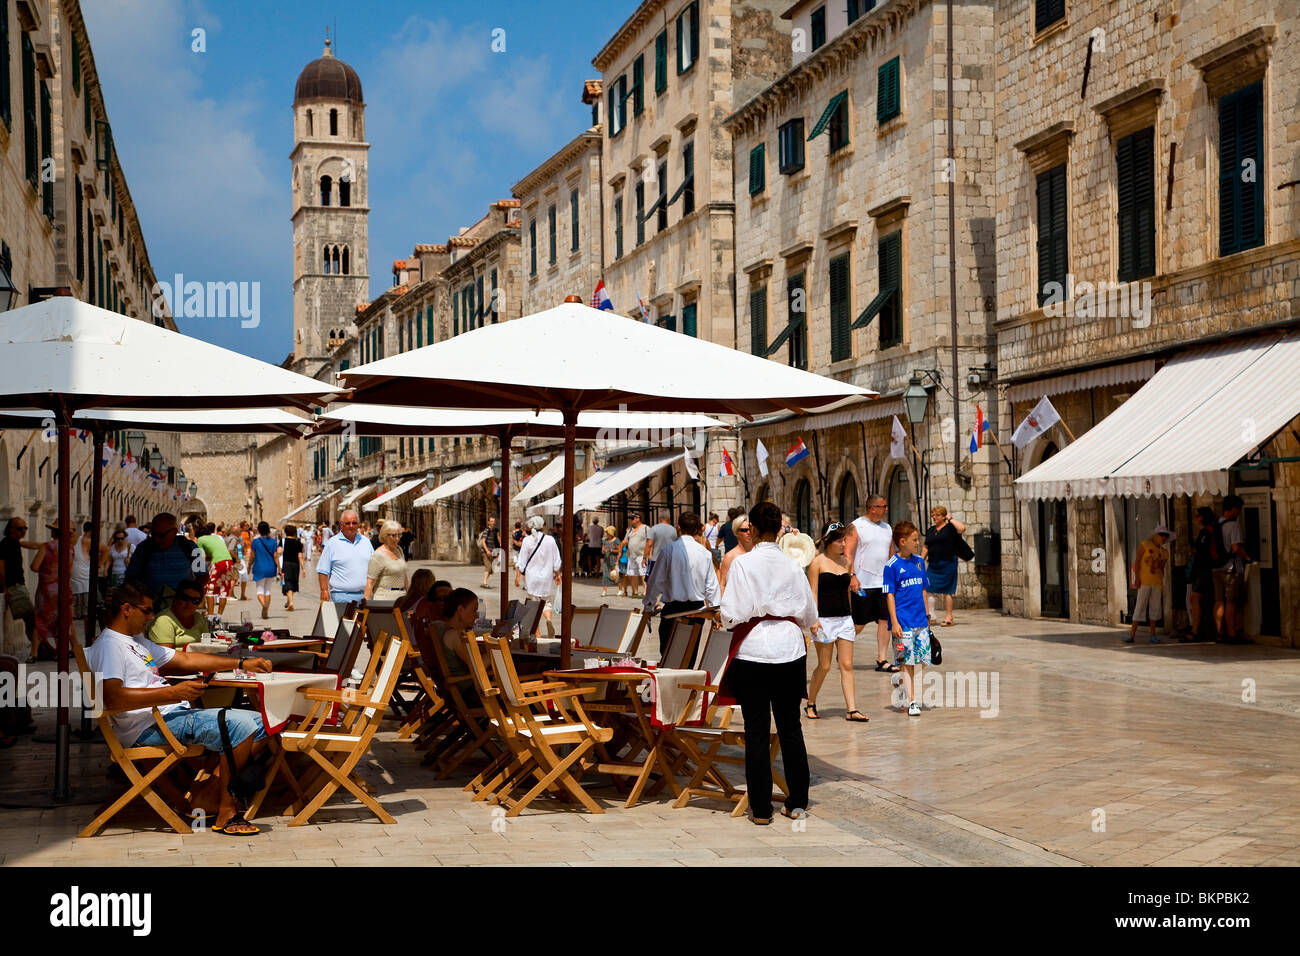 Historical center of Dubrovnik, Croatia Stock Photo